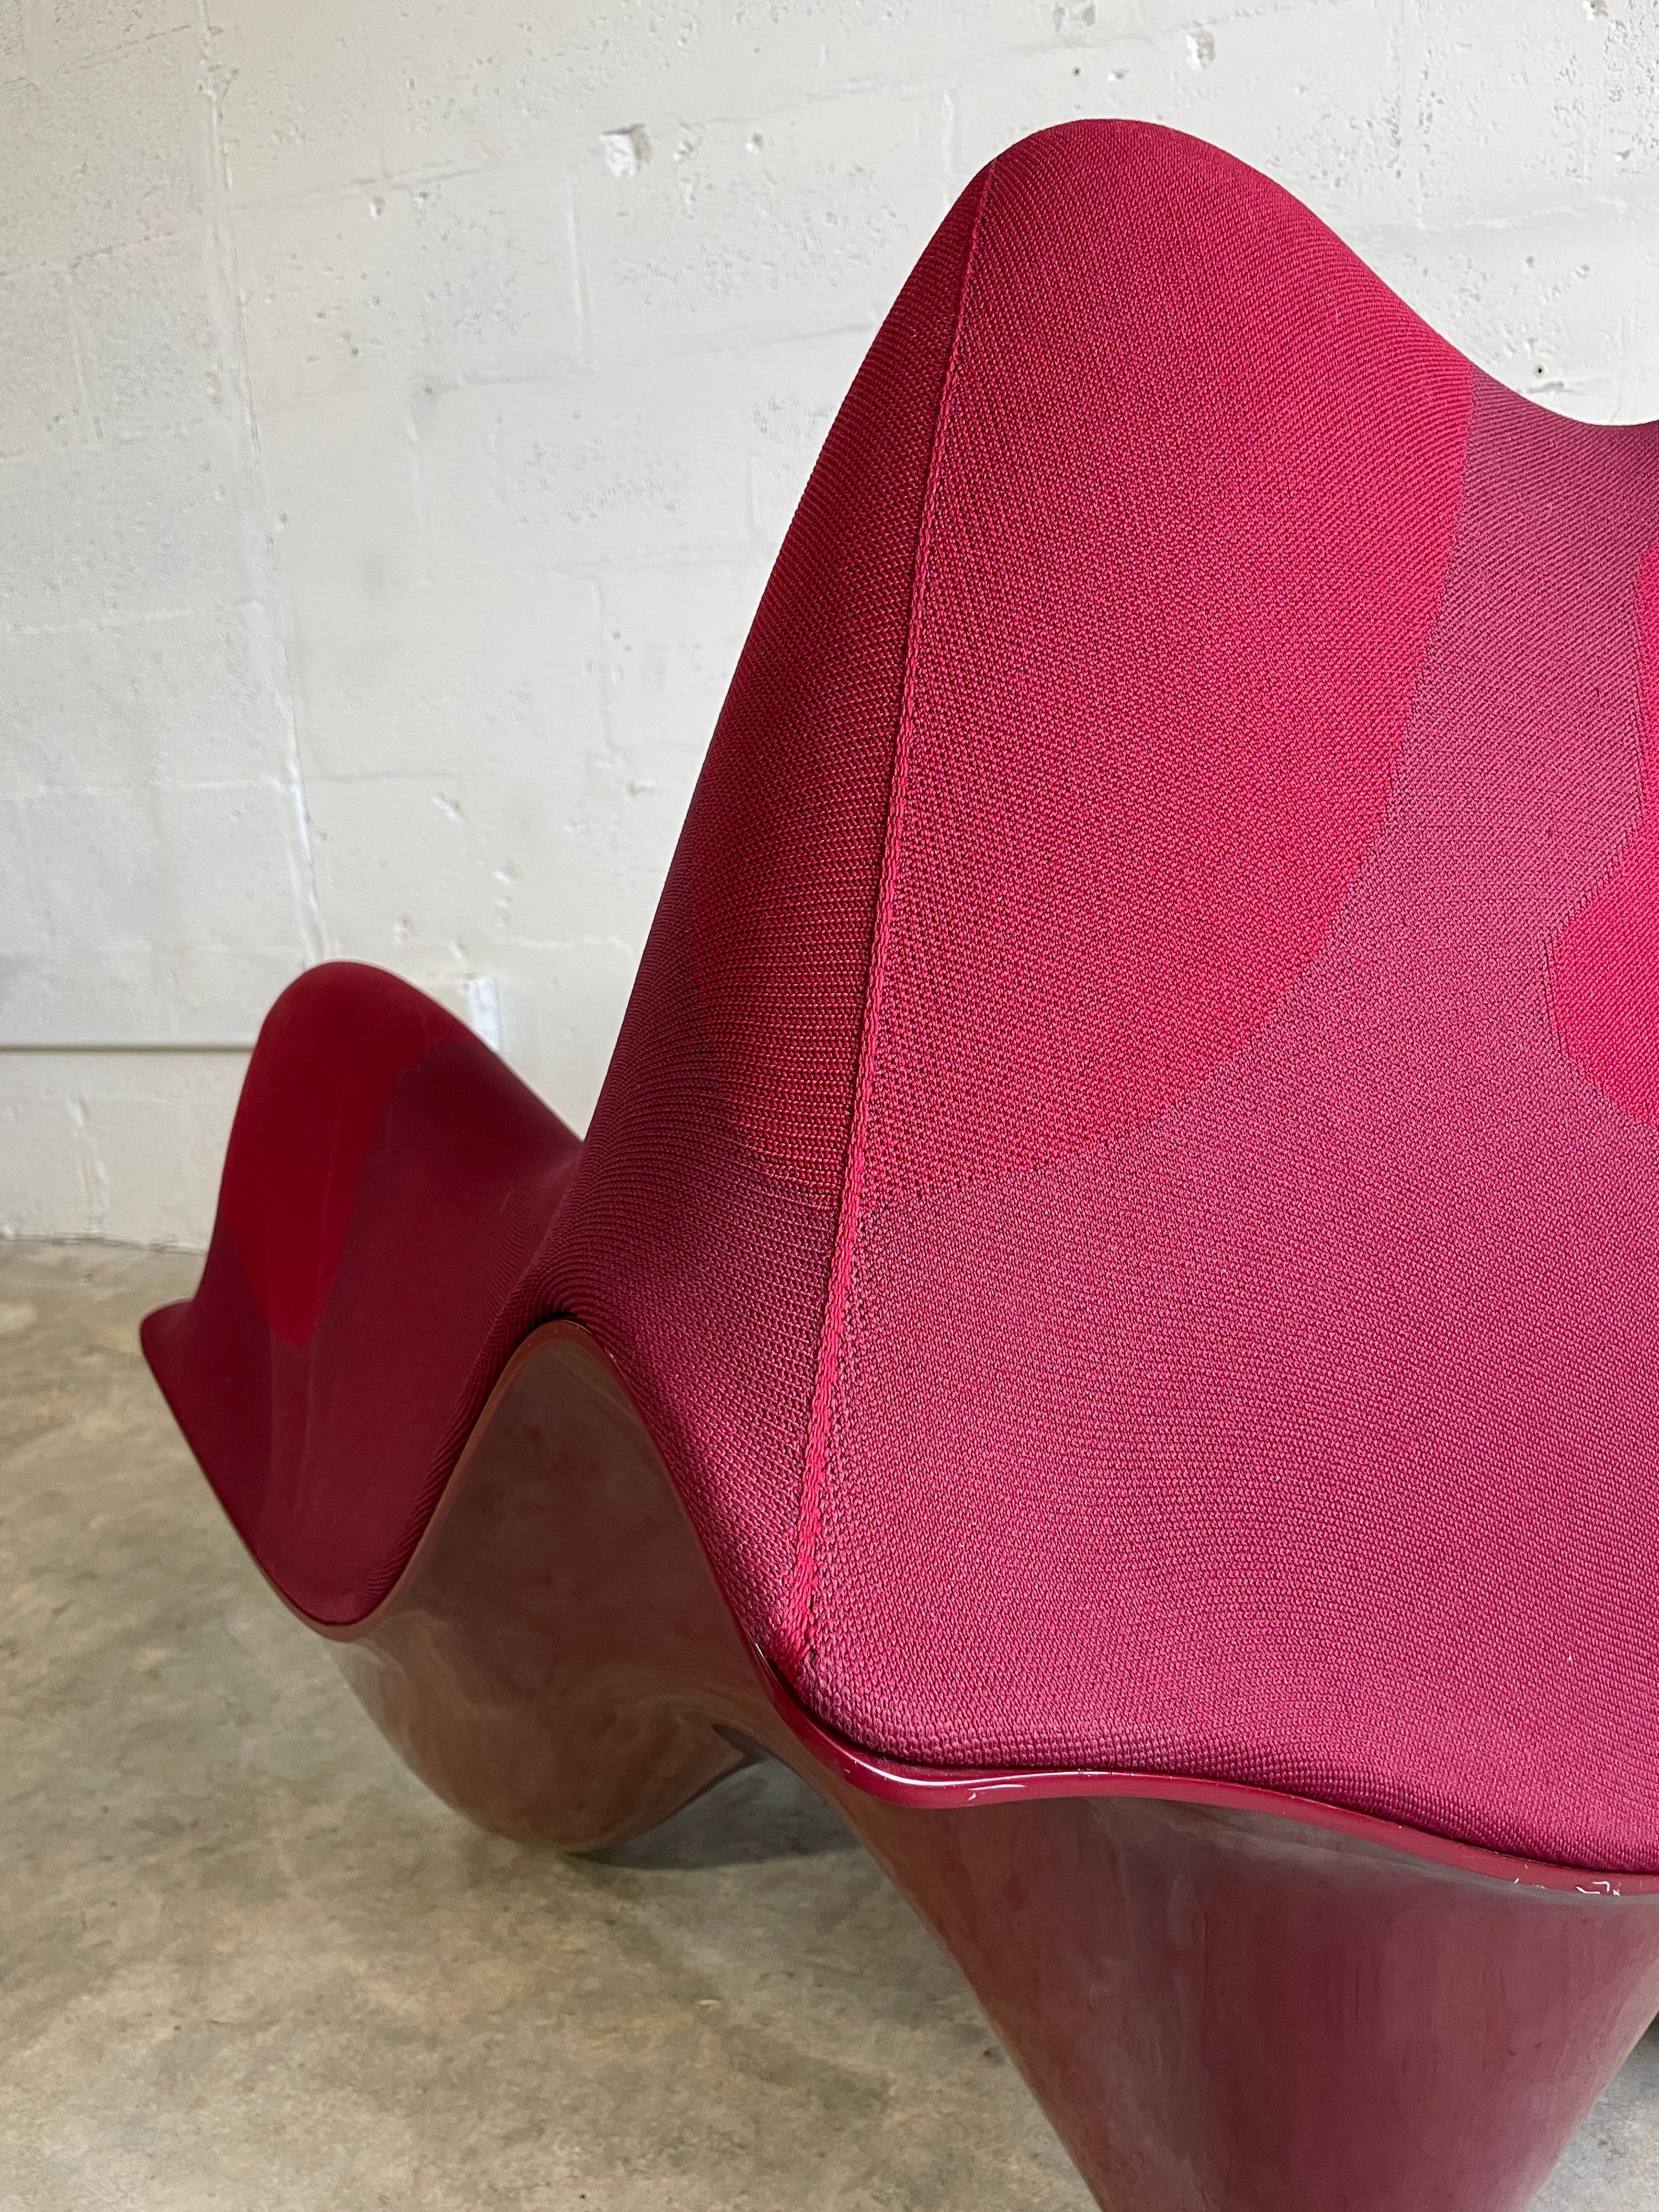 Textile Greg Lynn “Ravioli” Chair by Vitra For Sale